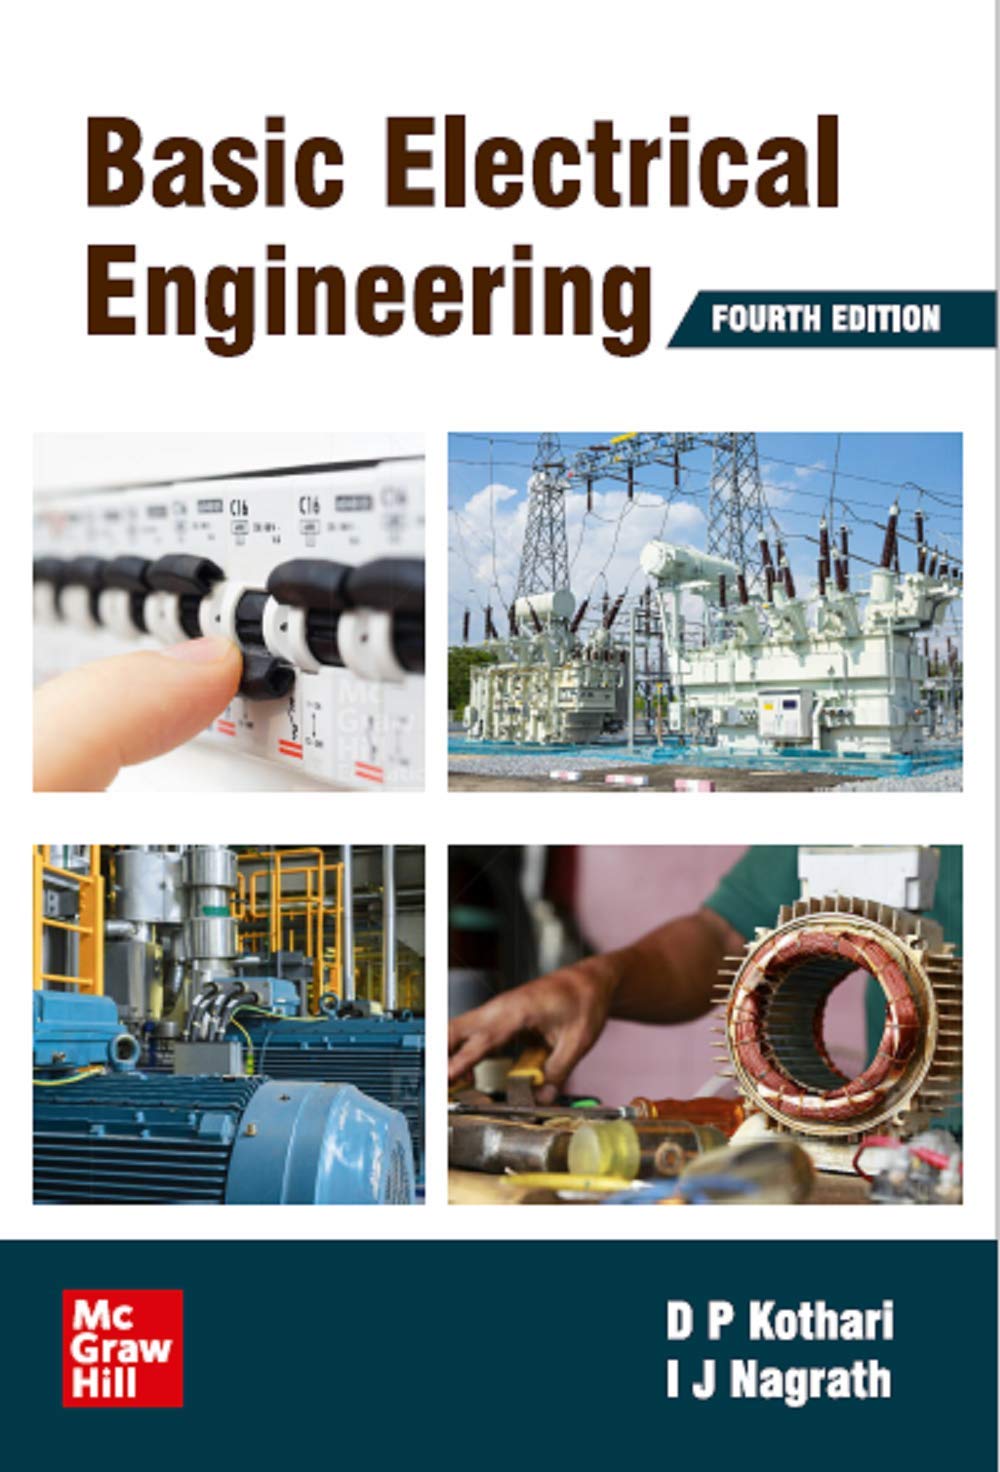 [PDF] Download Basic Electrical Engineering by DP Kothari and IJ Nagrath Book pdf